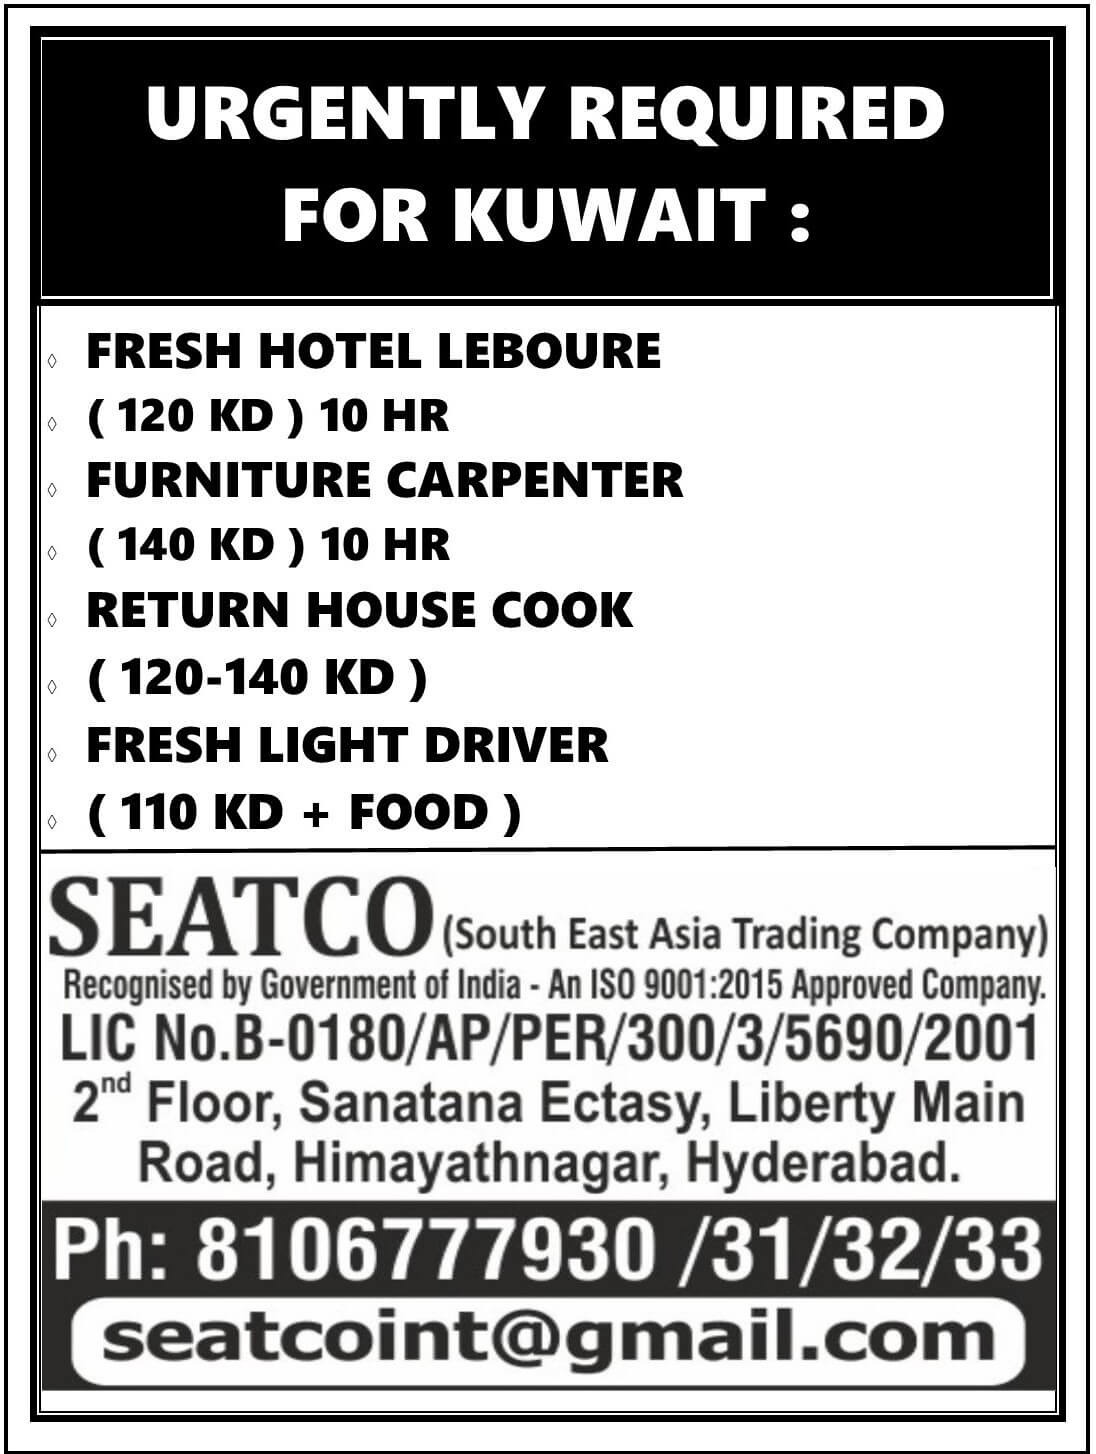 URGENT REQUIRED FOR KUWAIT